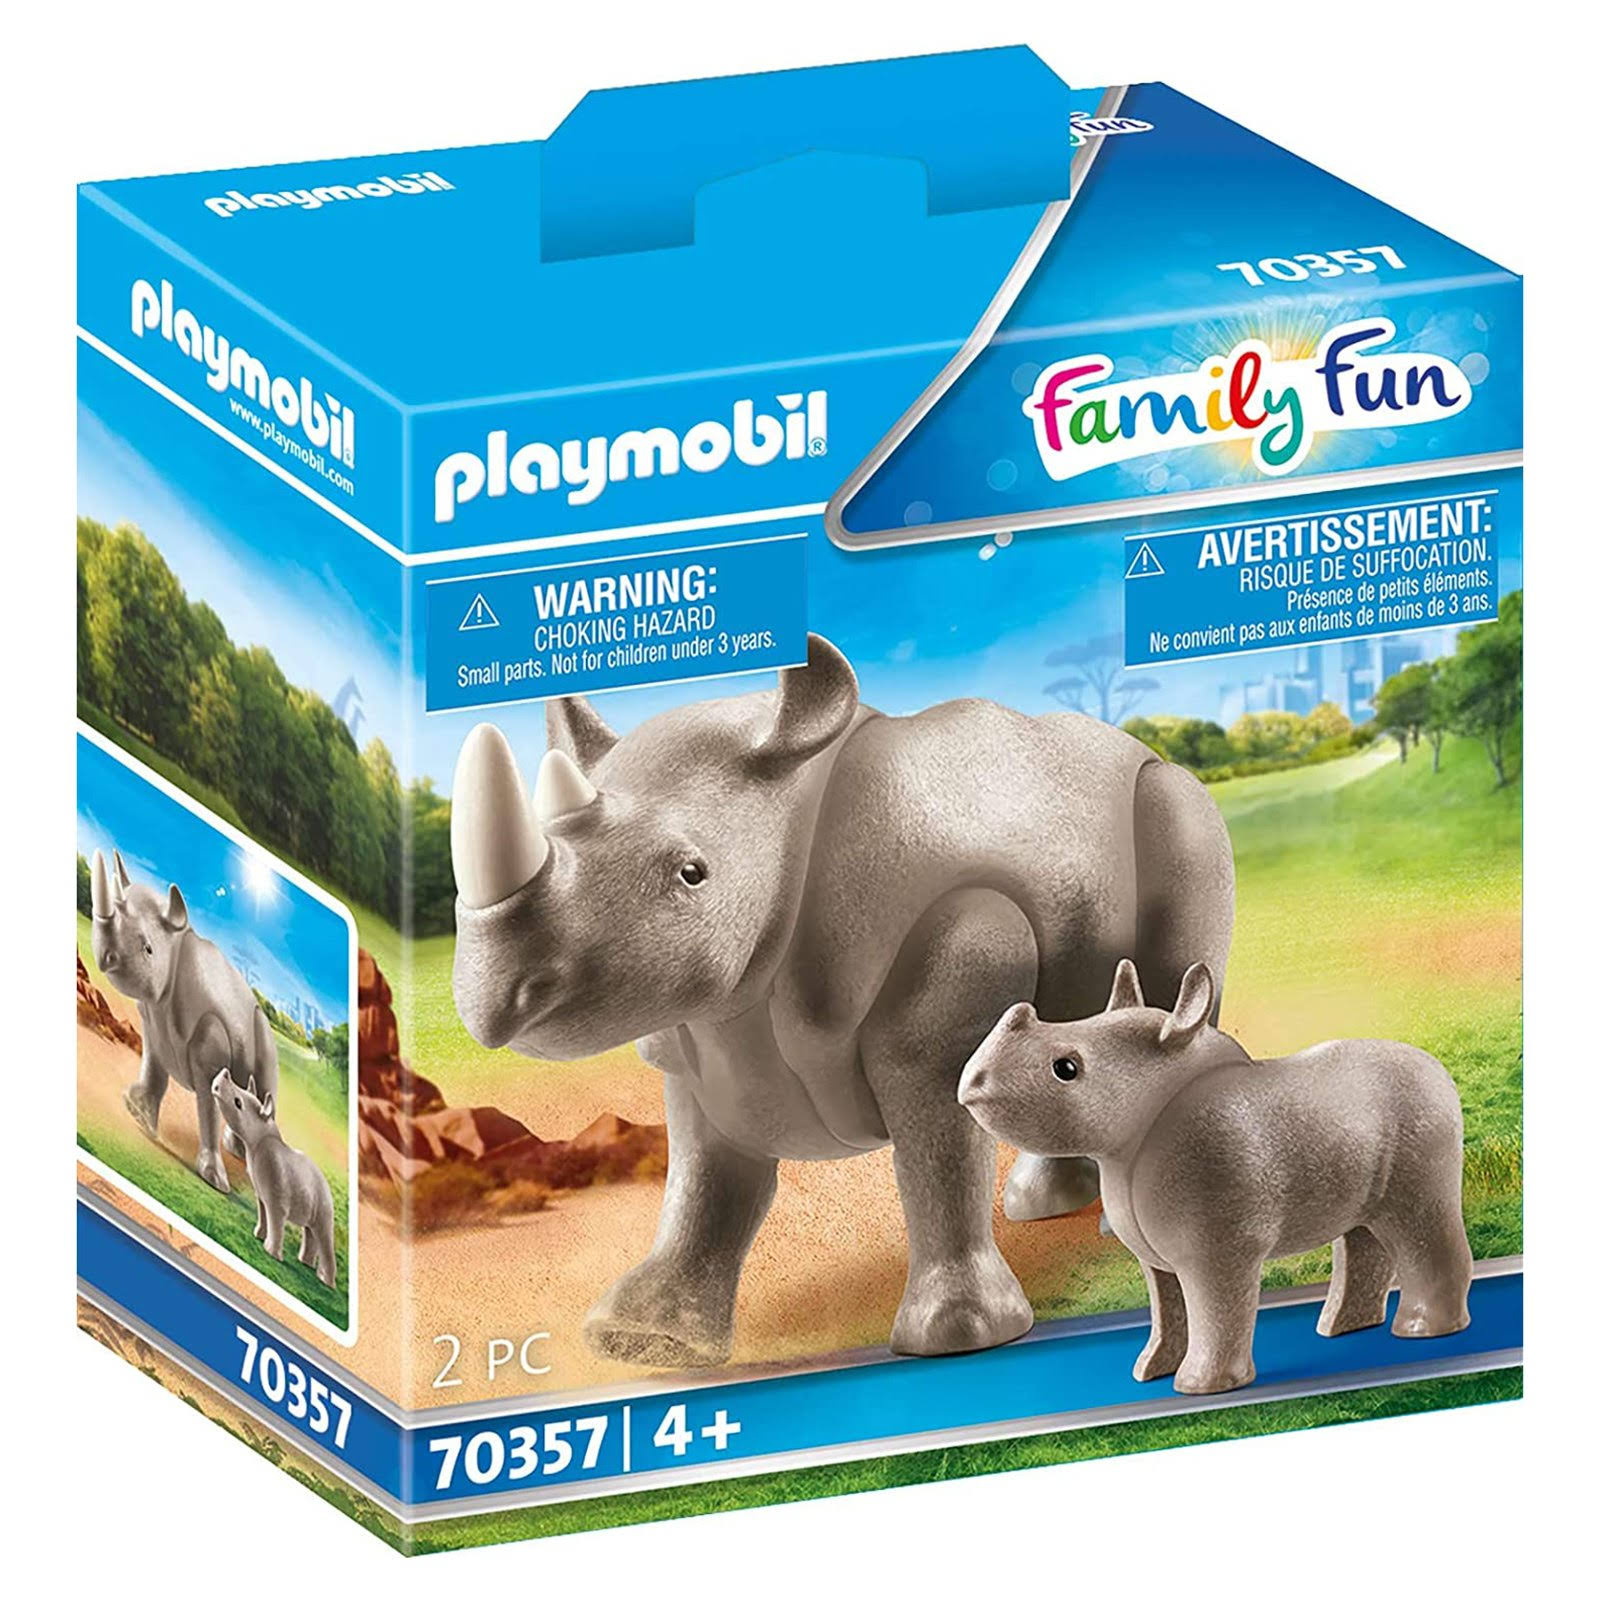 Playmobil 70357 - Rhino with Calf